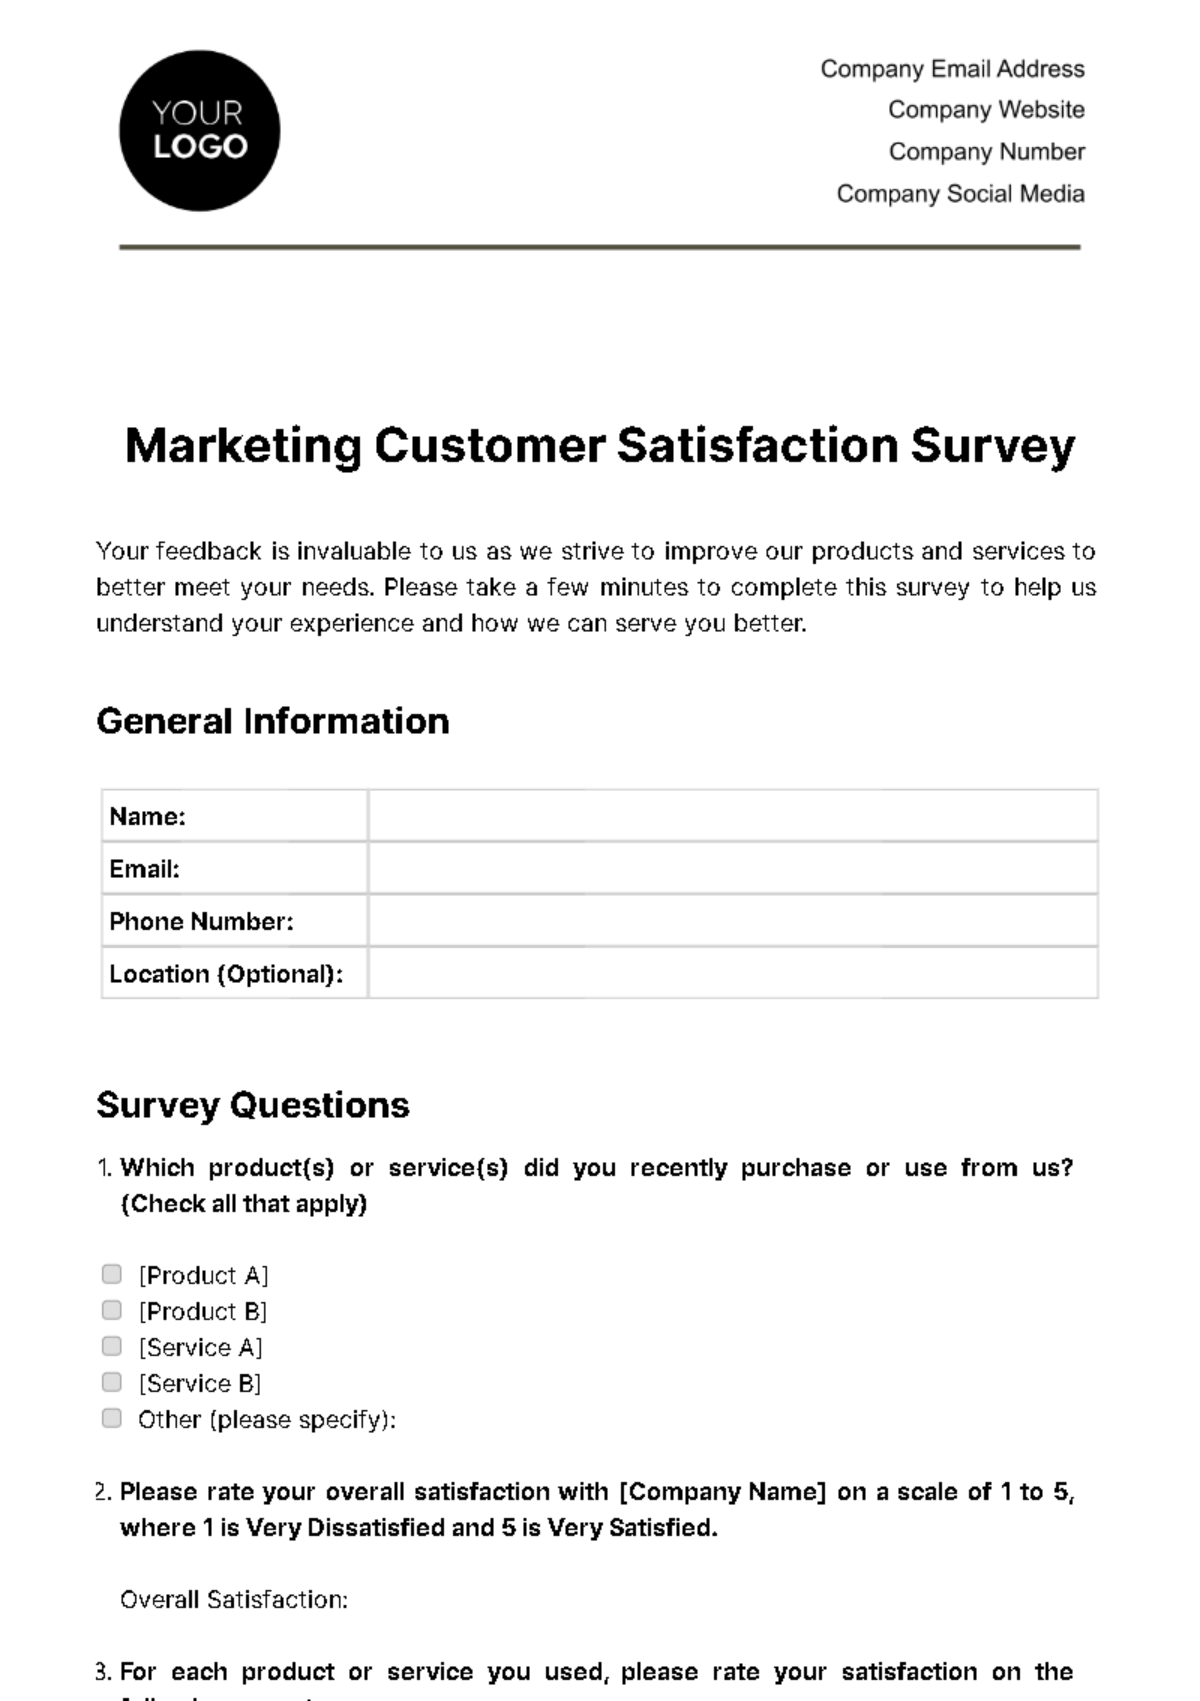 Marketing Customer Satisfaction Survey Template